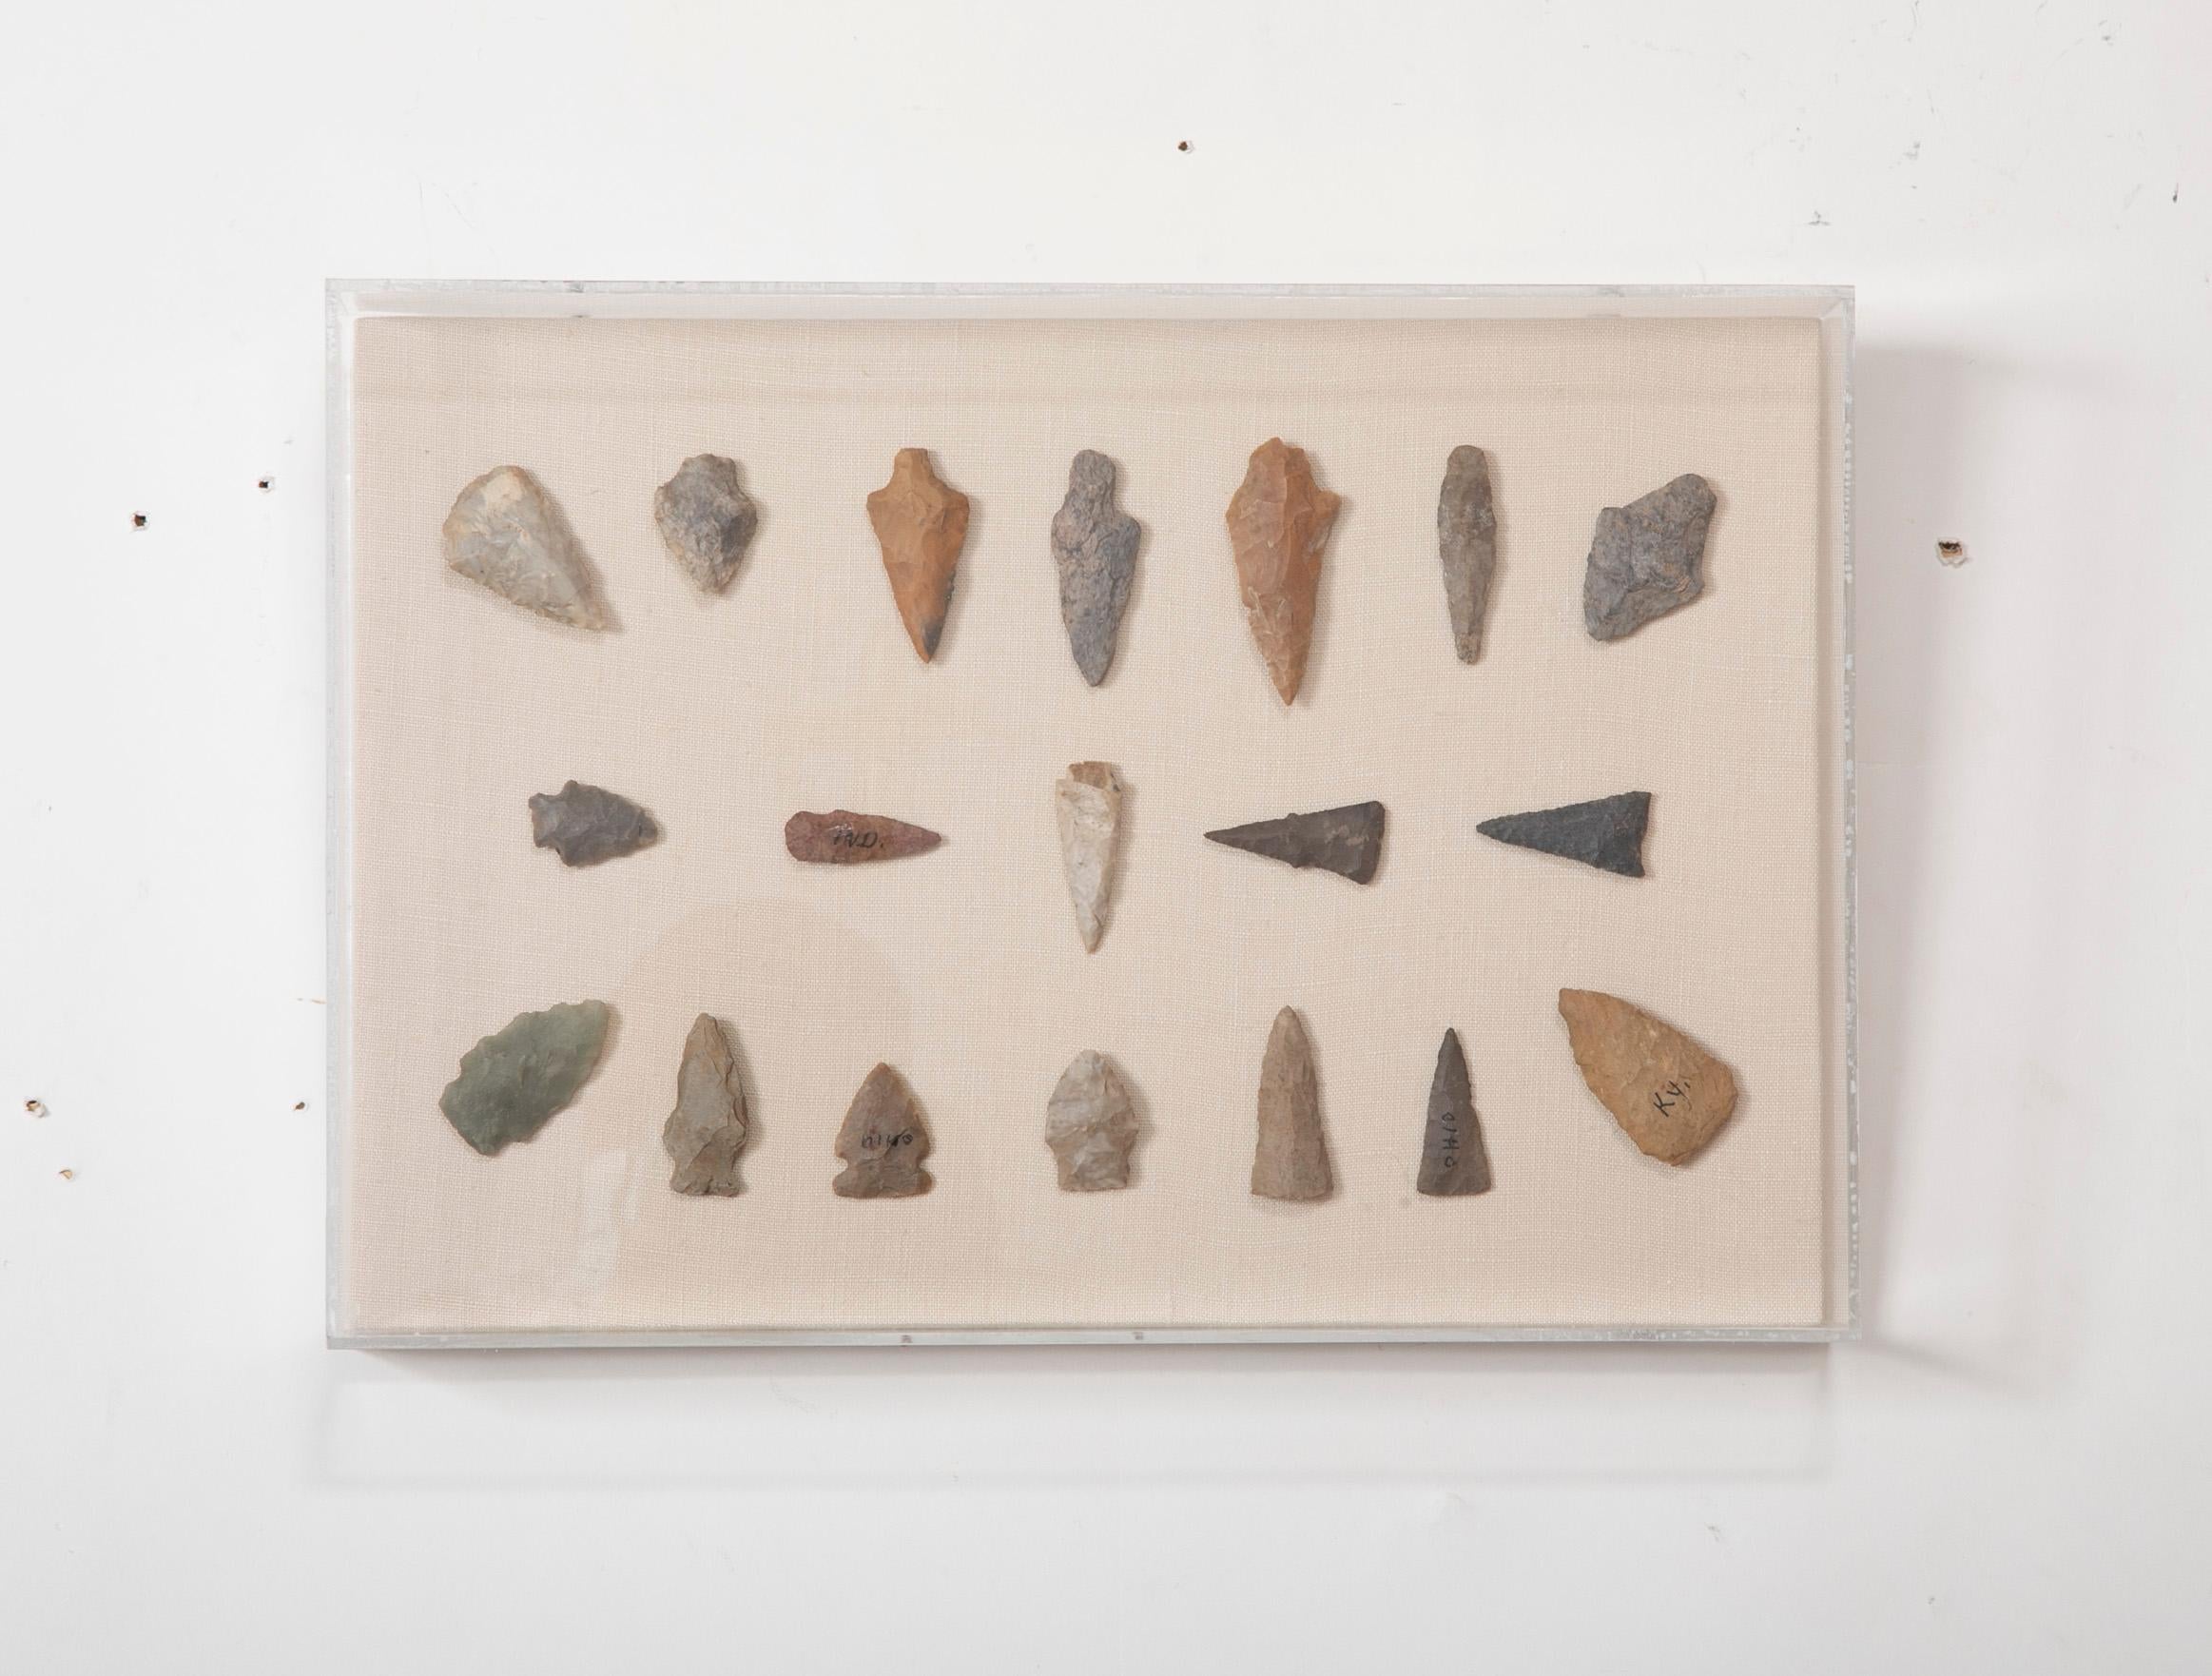 arrowhead collection for sale